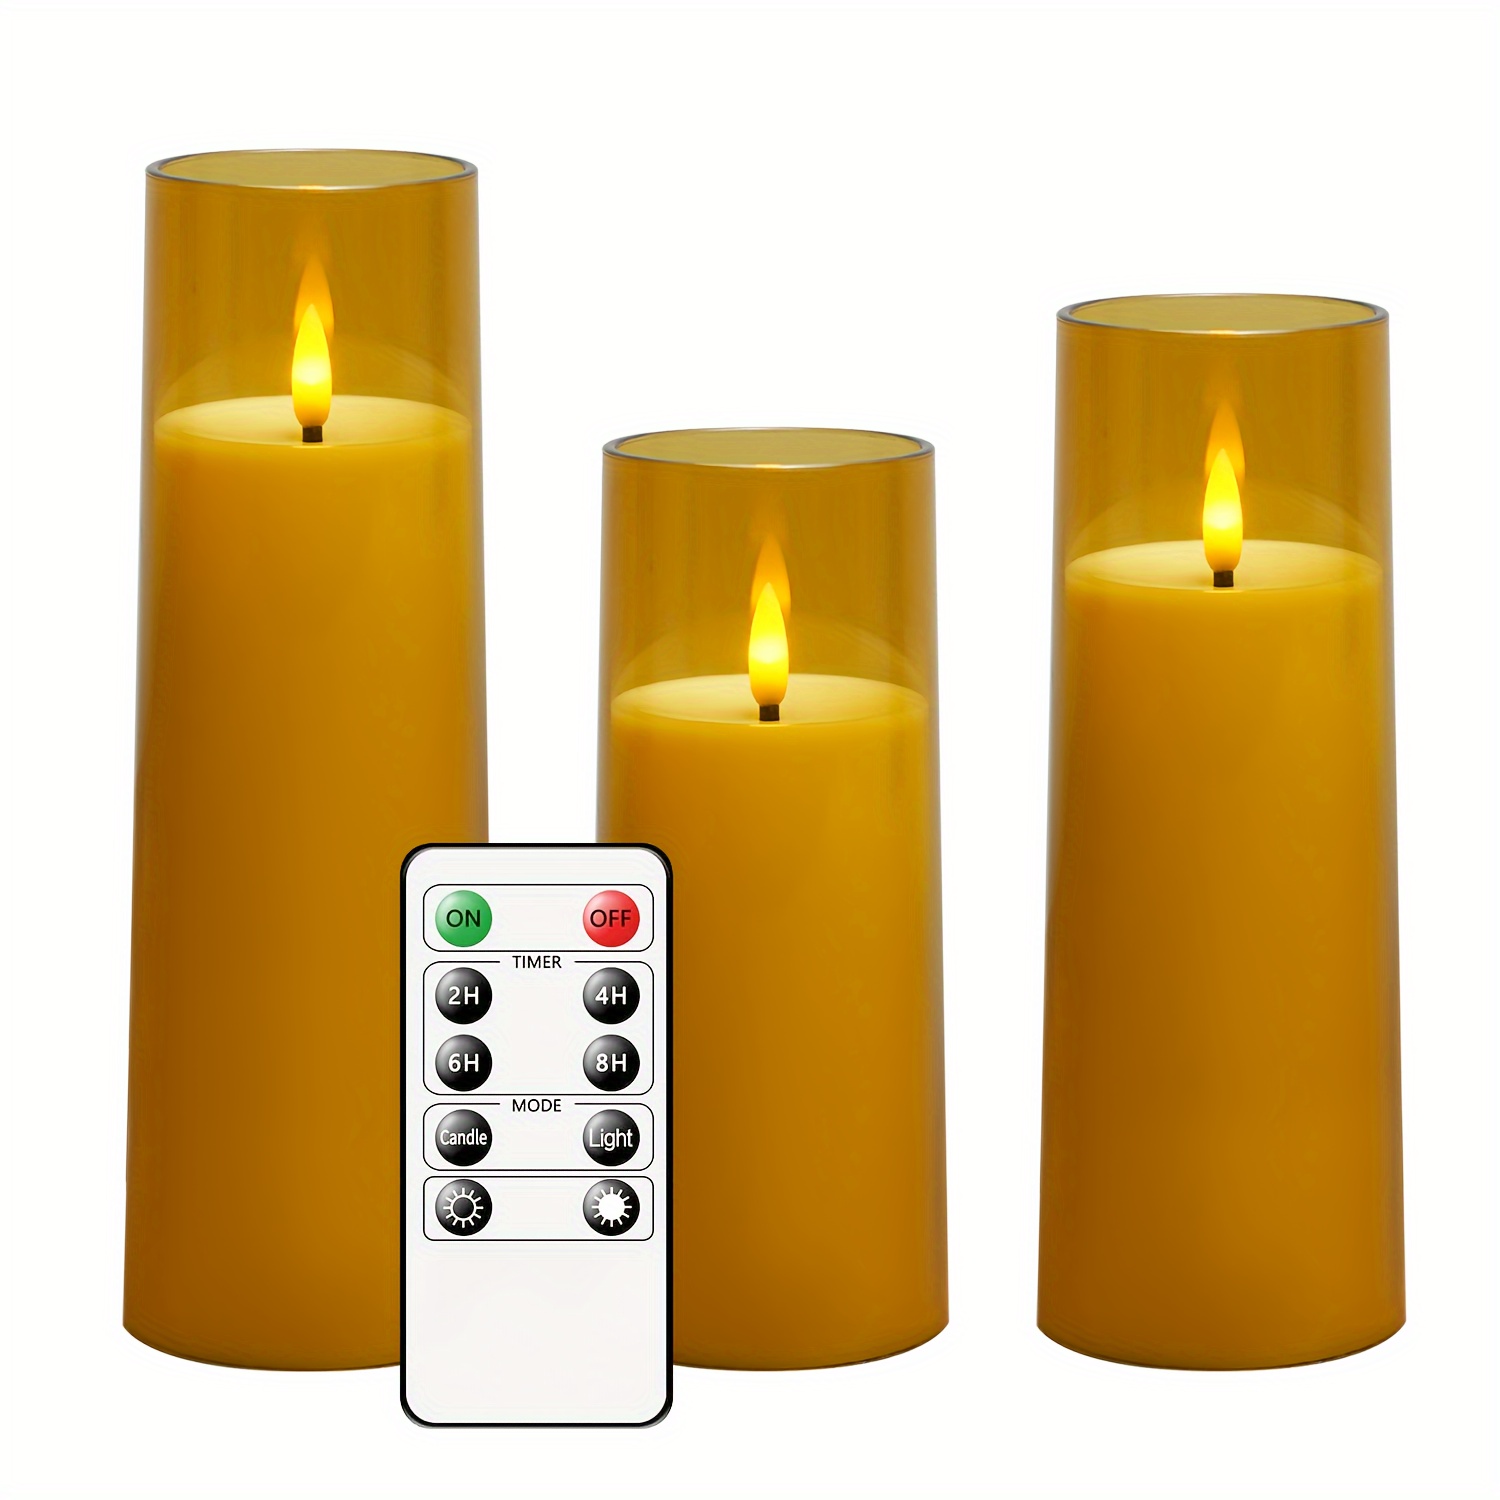 Hengda Candele LED Set di 5 candele di diverse dimensioni con telecomando  Luce LED tremolante Candela